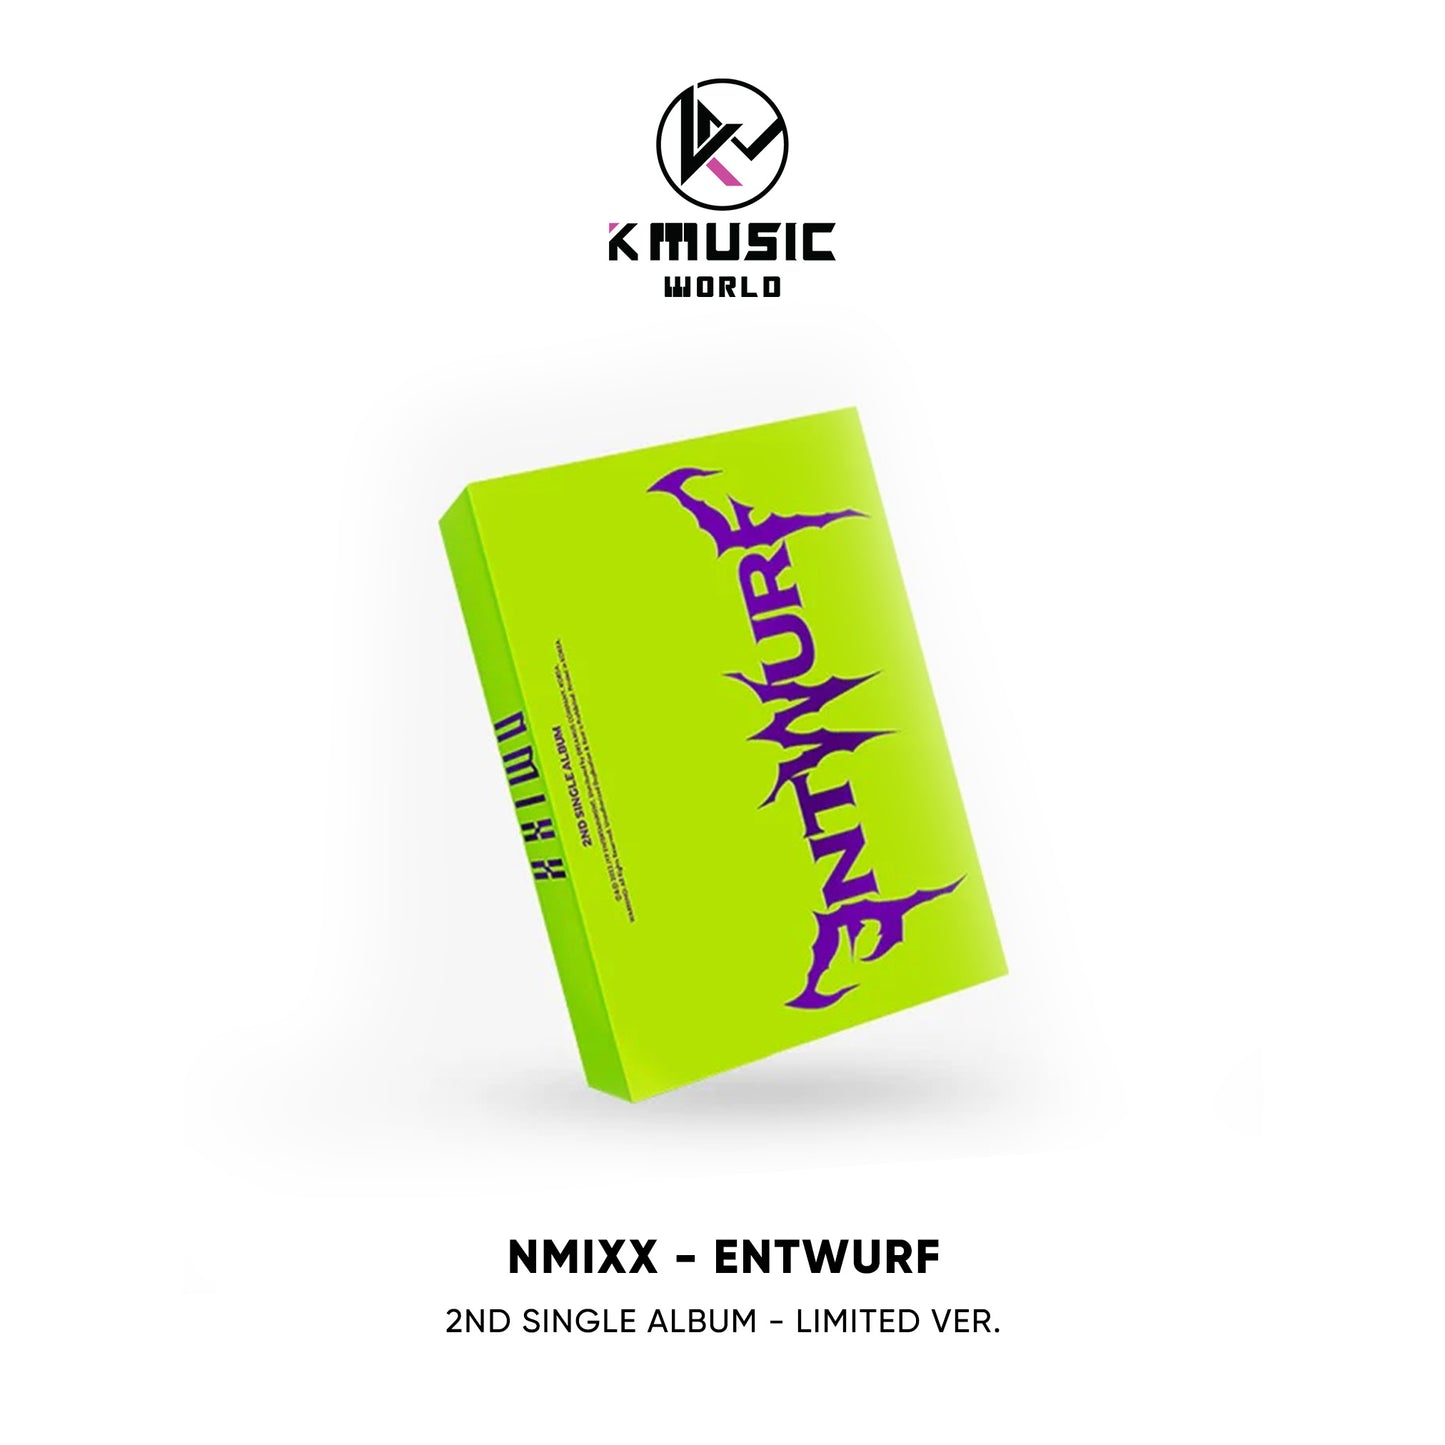 NMIXX - ENTWURF [2nd Single Album - Limited Ver.]